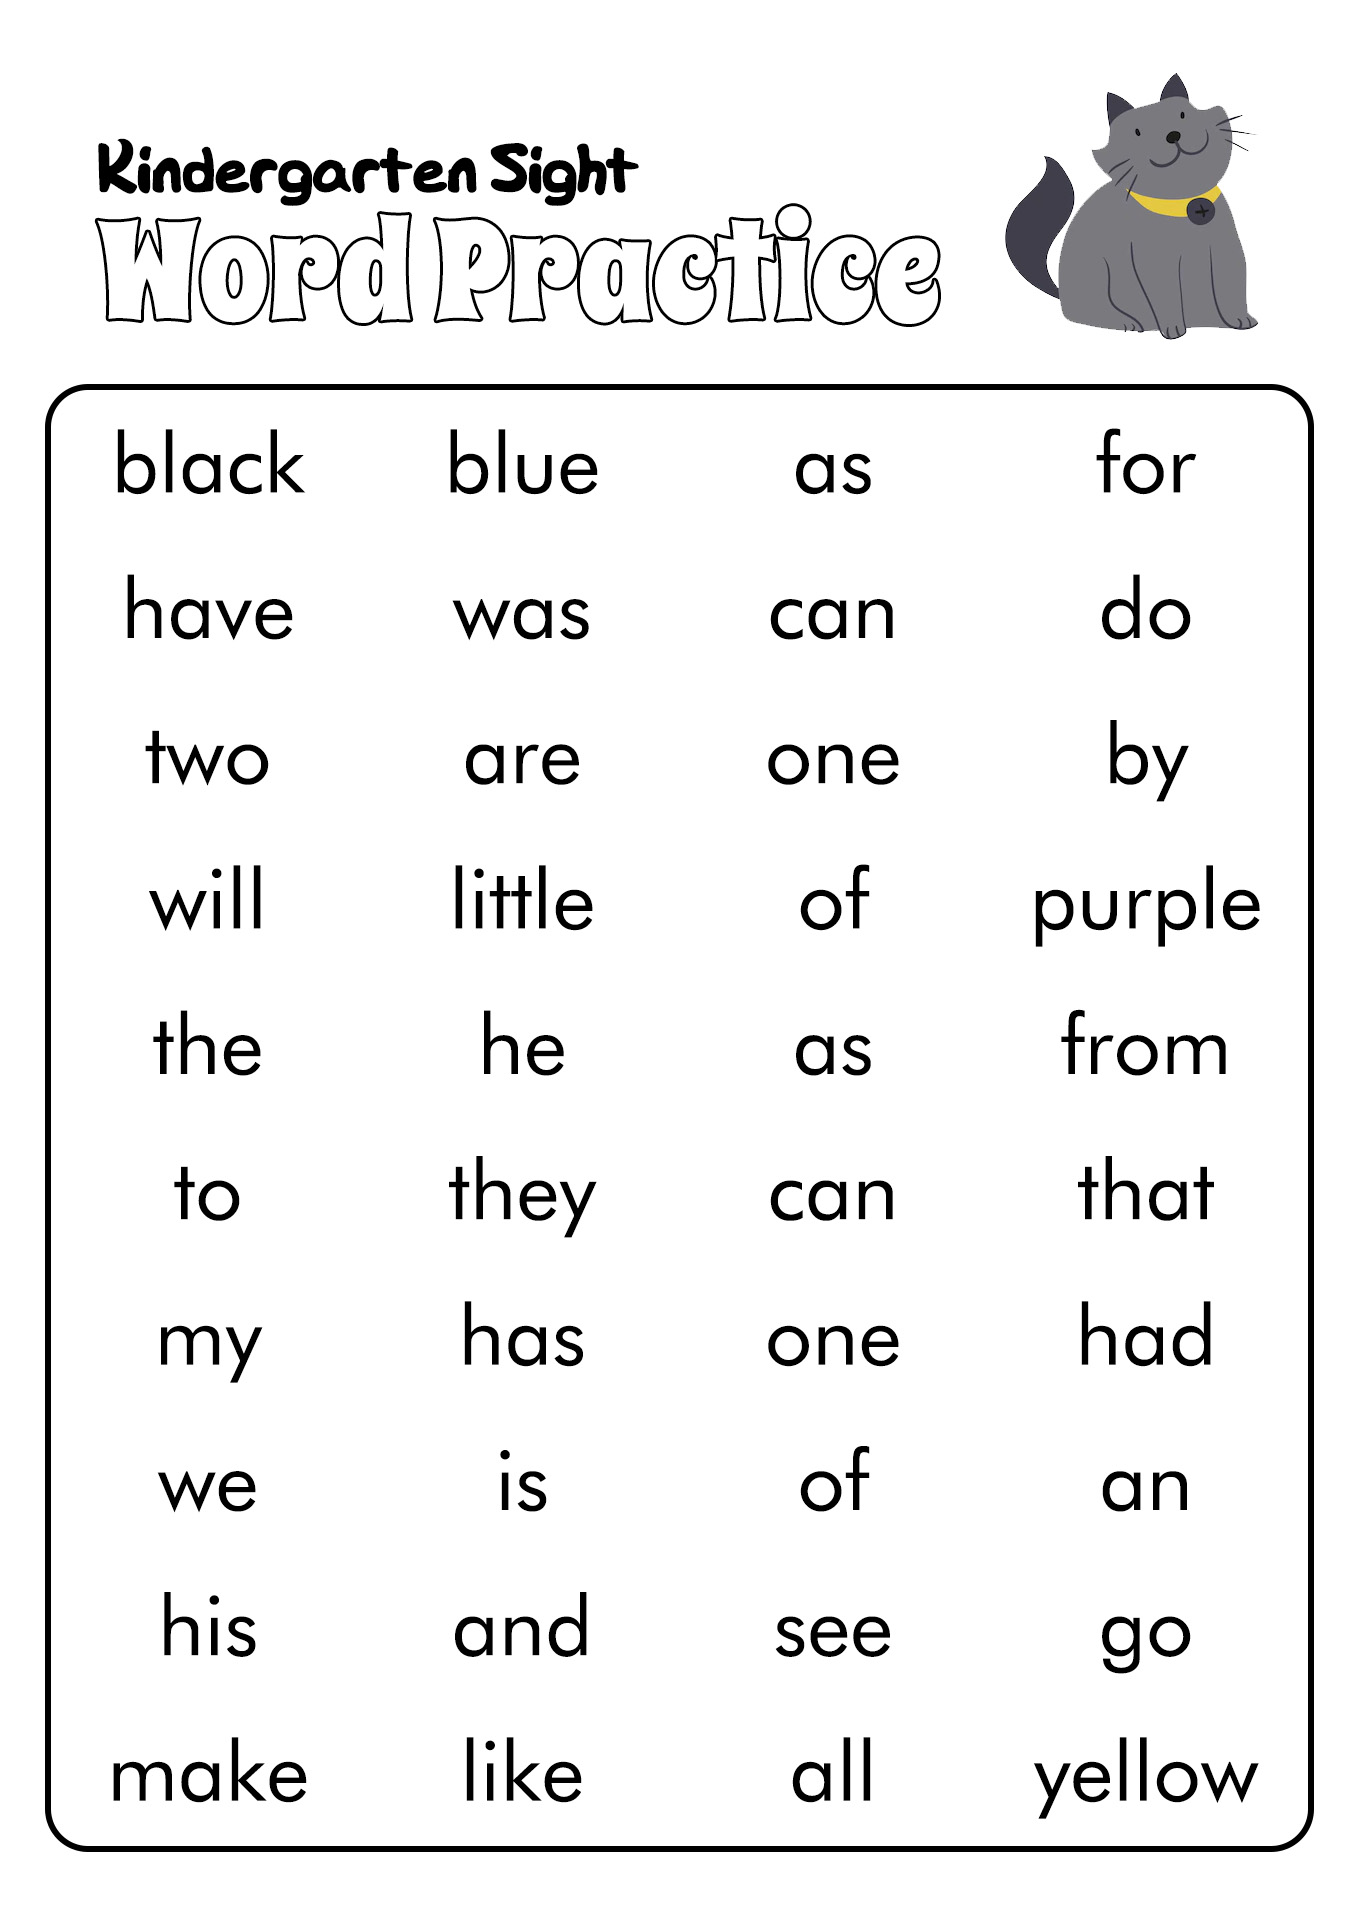 English Words For Kindergarten